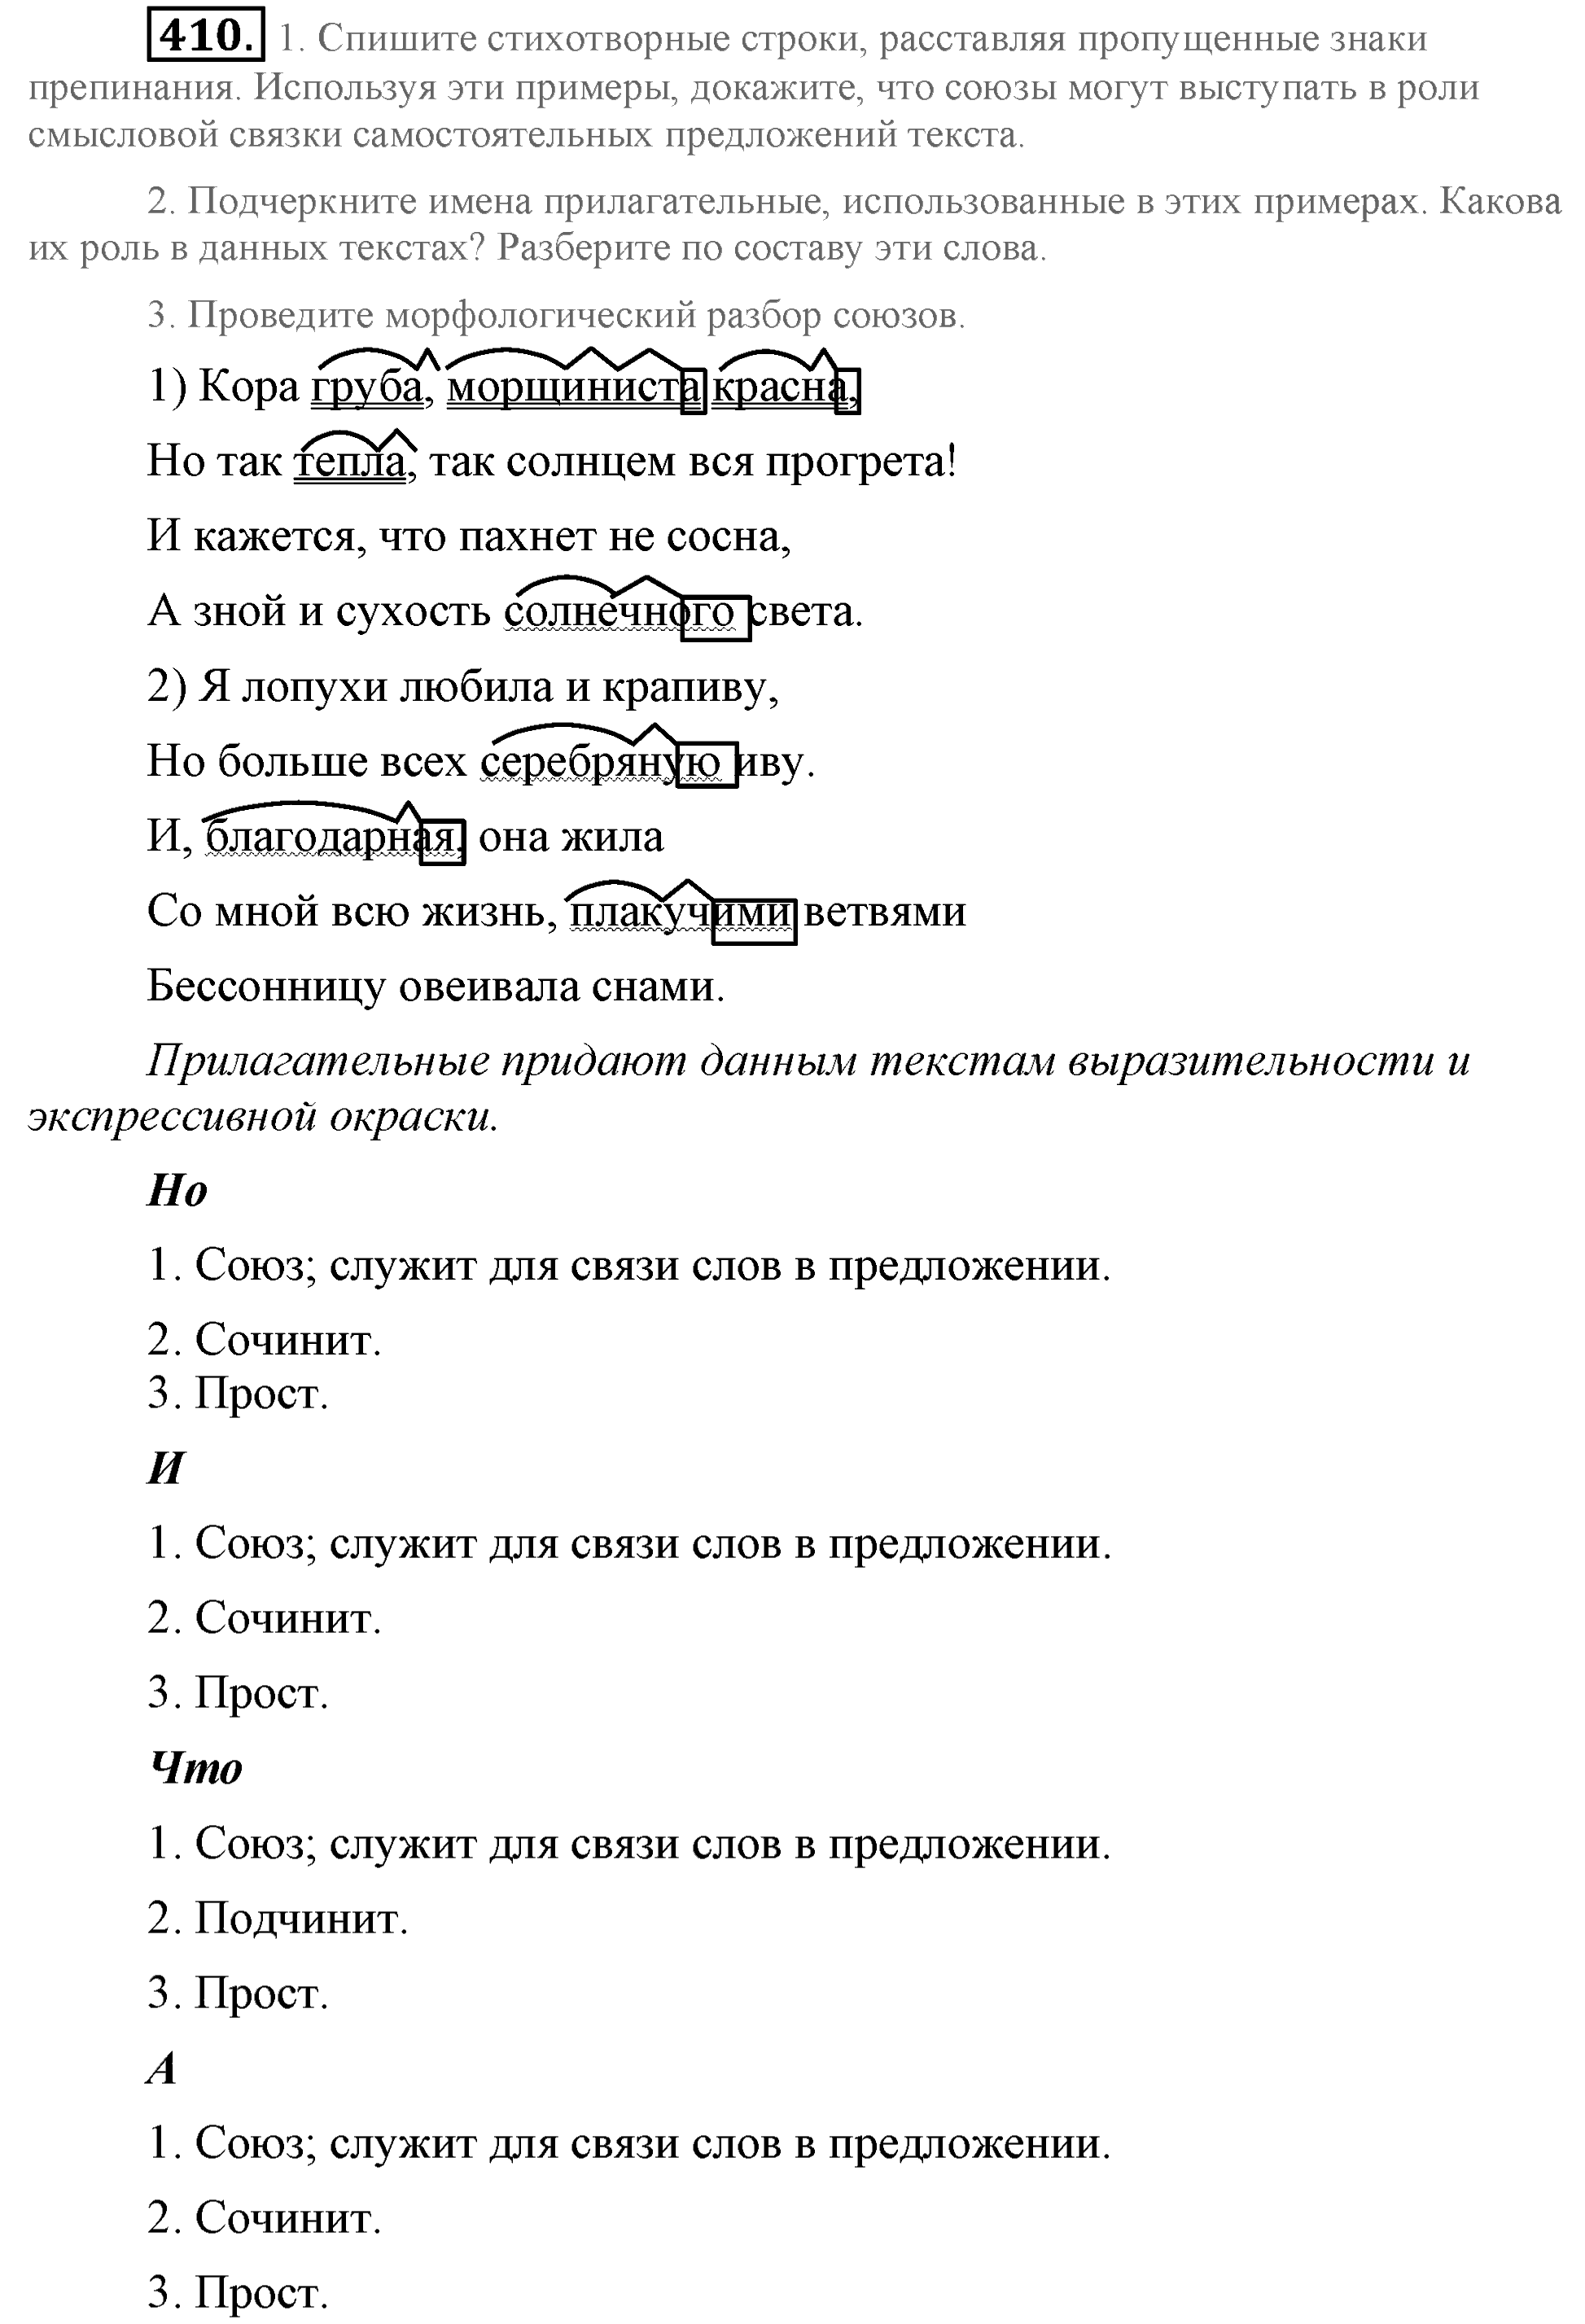 Практика, 7 класс, М.М. Разумовская, 2009, задача: 410